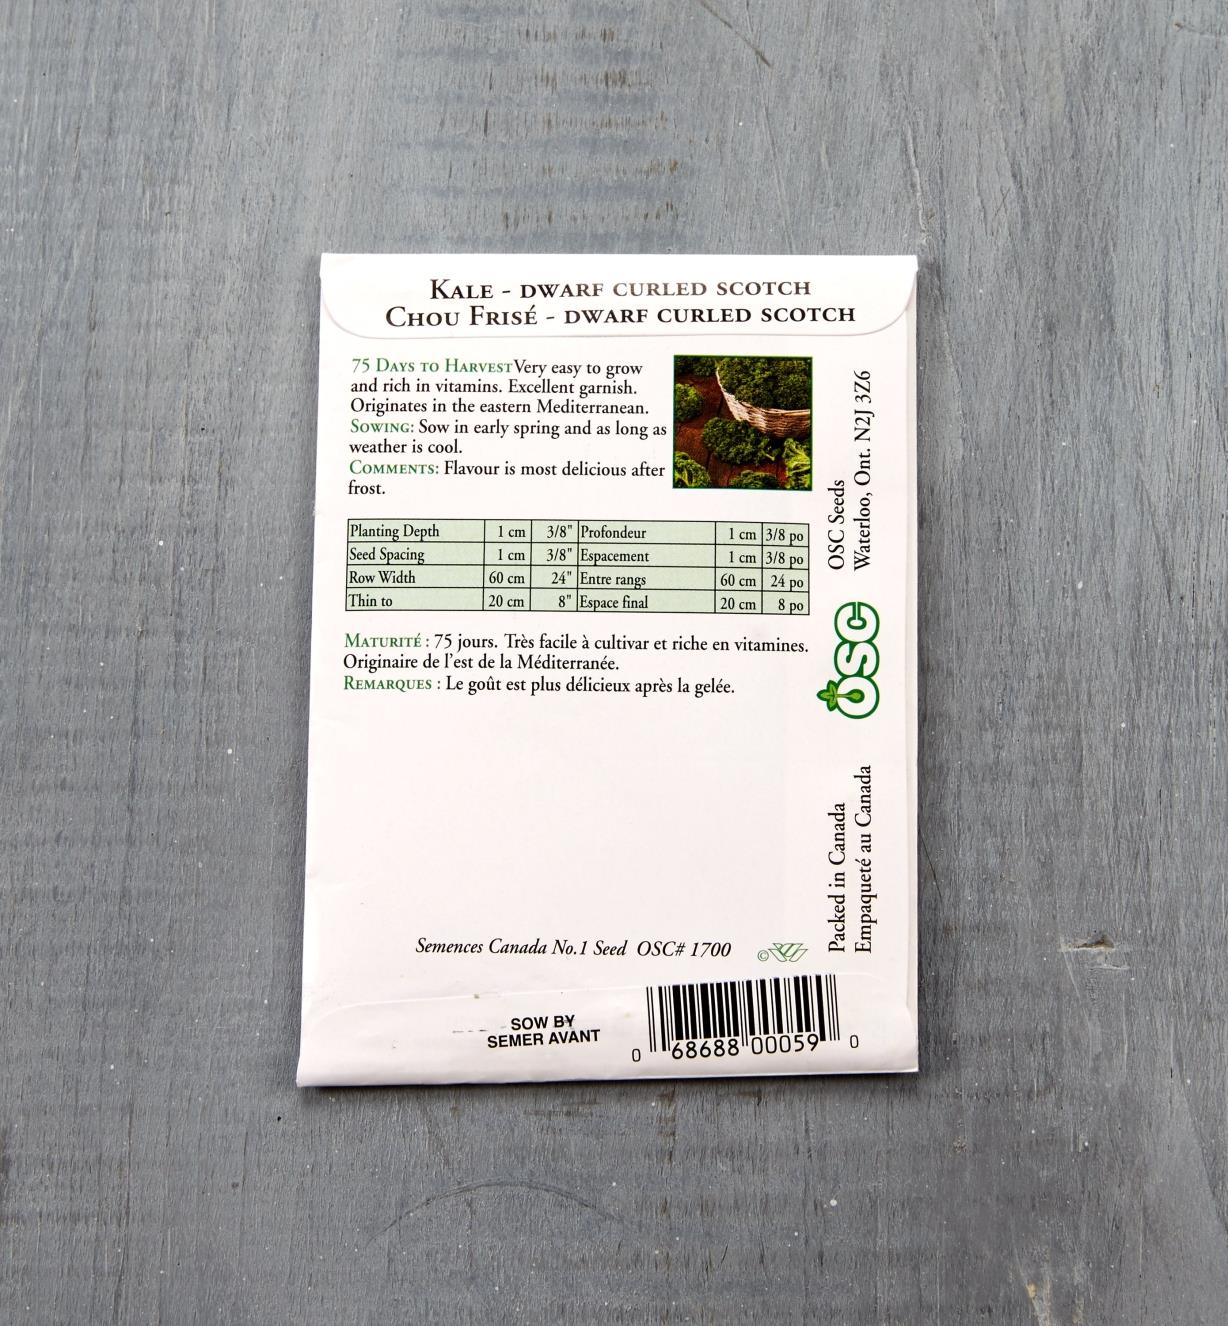 SD145 - Kale, Dwarf Curled Scotch